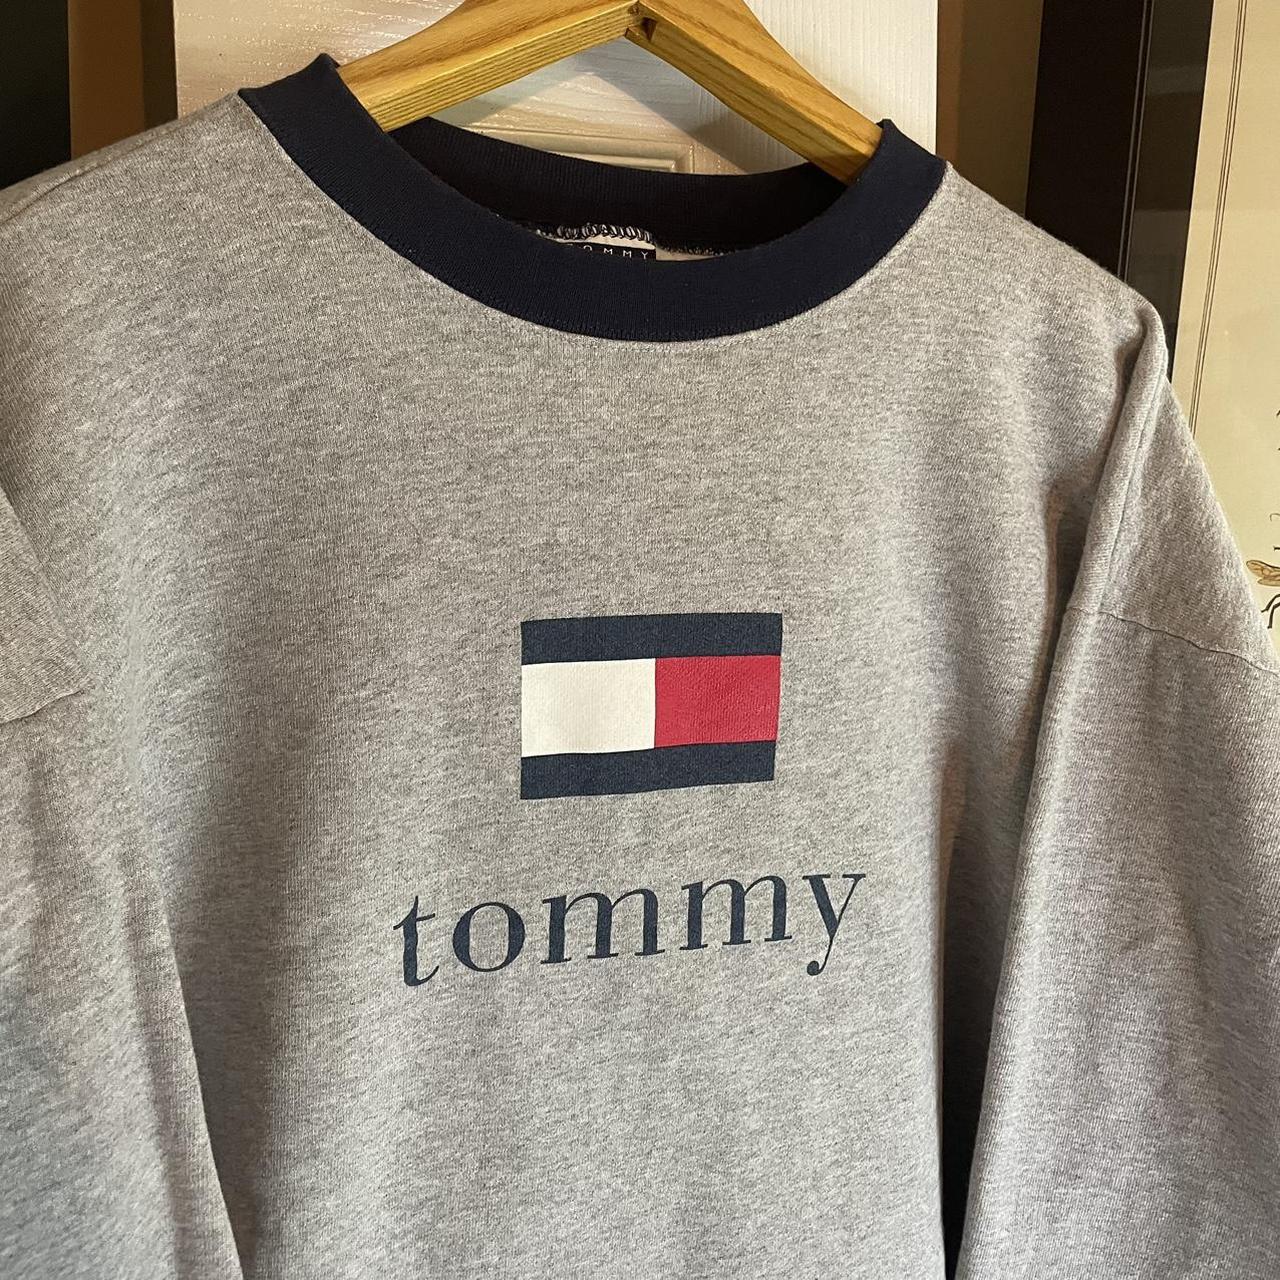 Tommy Hilfiger Vintage Huge Print Thick Sweatshirt... - Depop